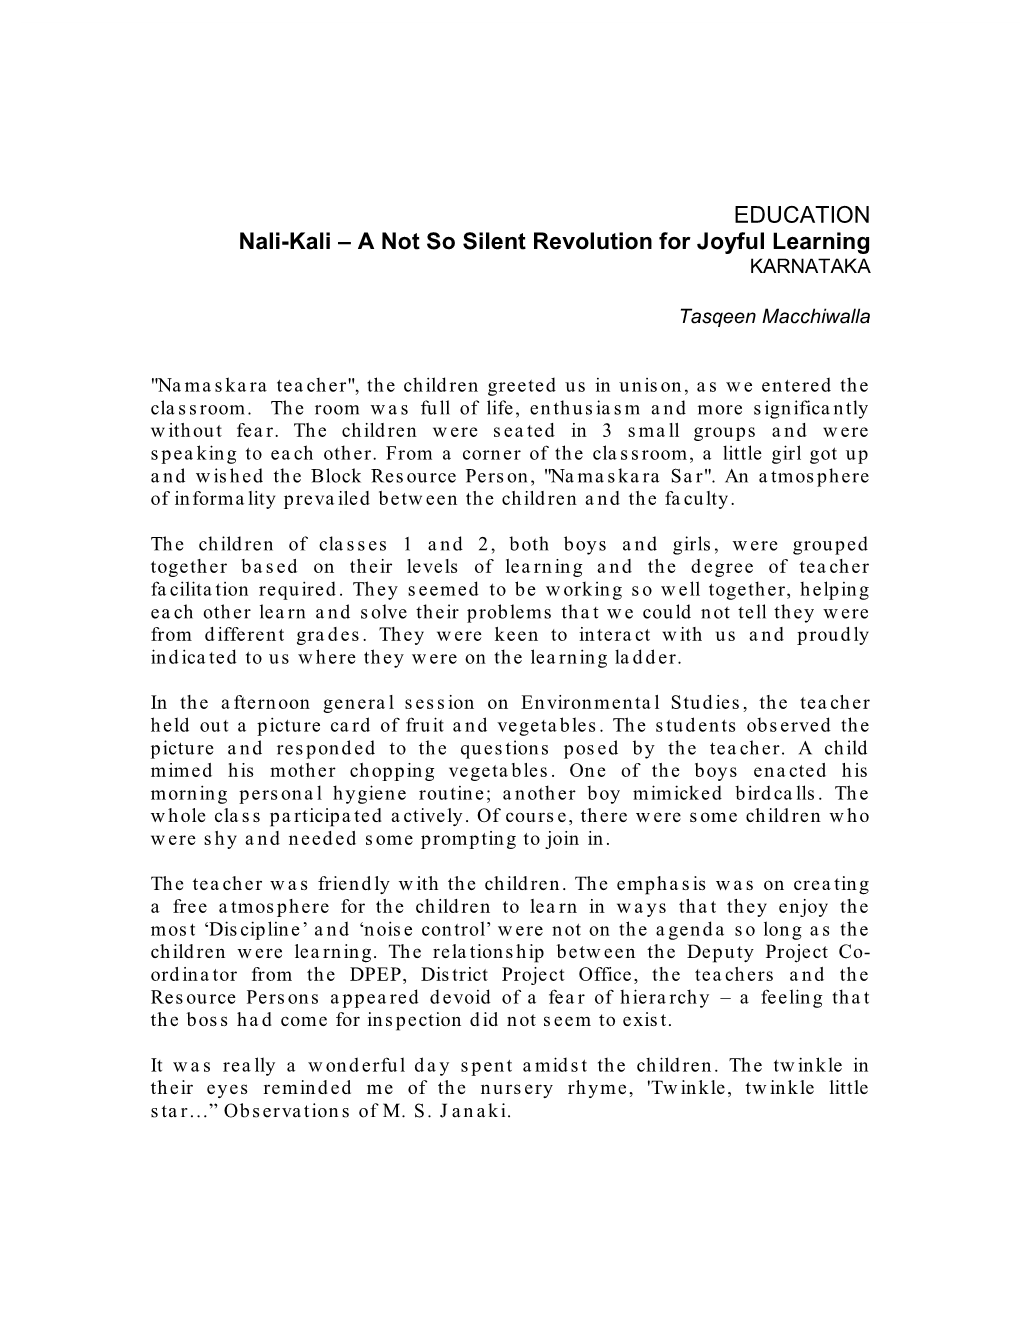 EDUCATION Nali-Kali – a Not So Silent Revolution for Joyful Learning KARNATAKA